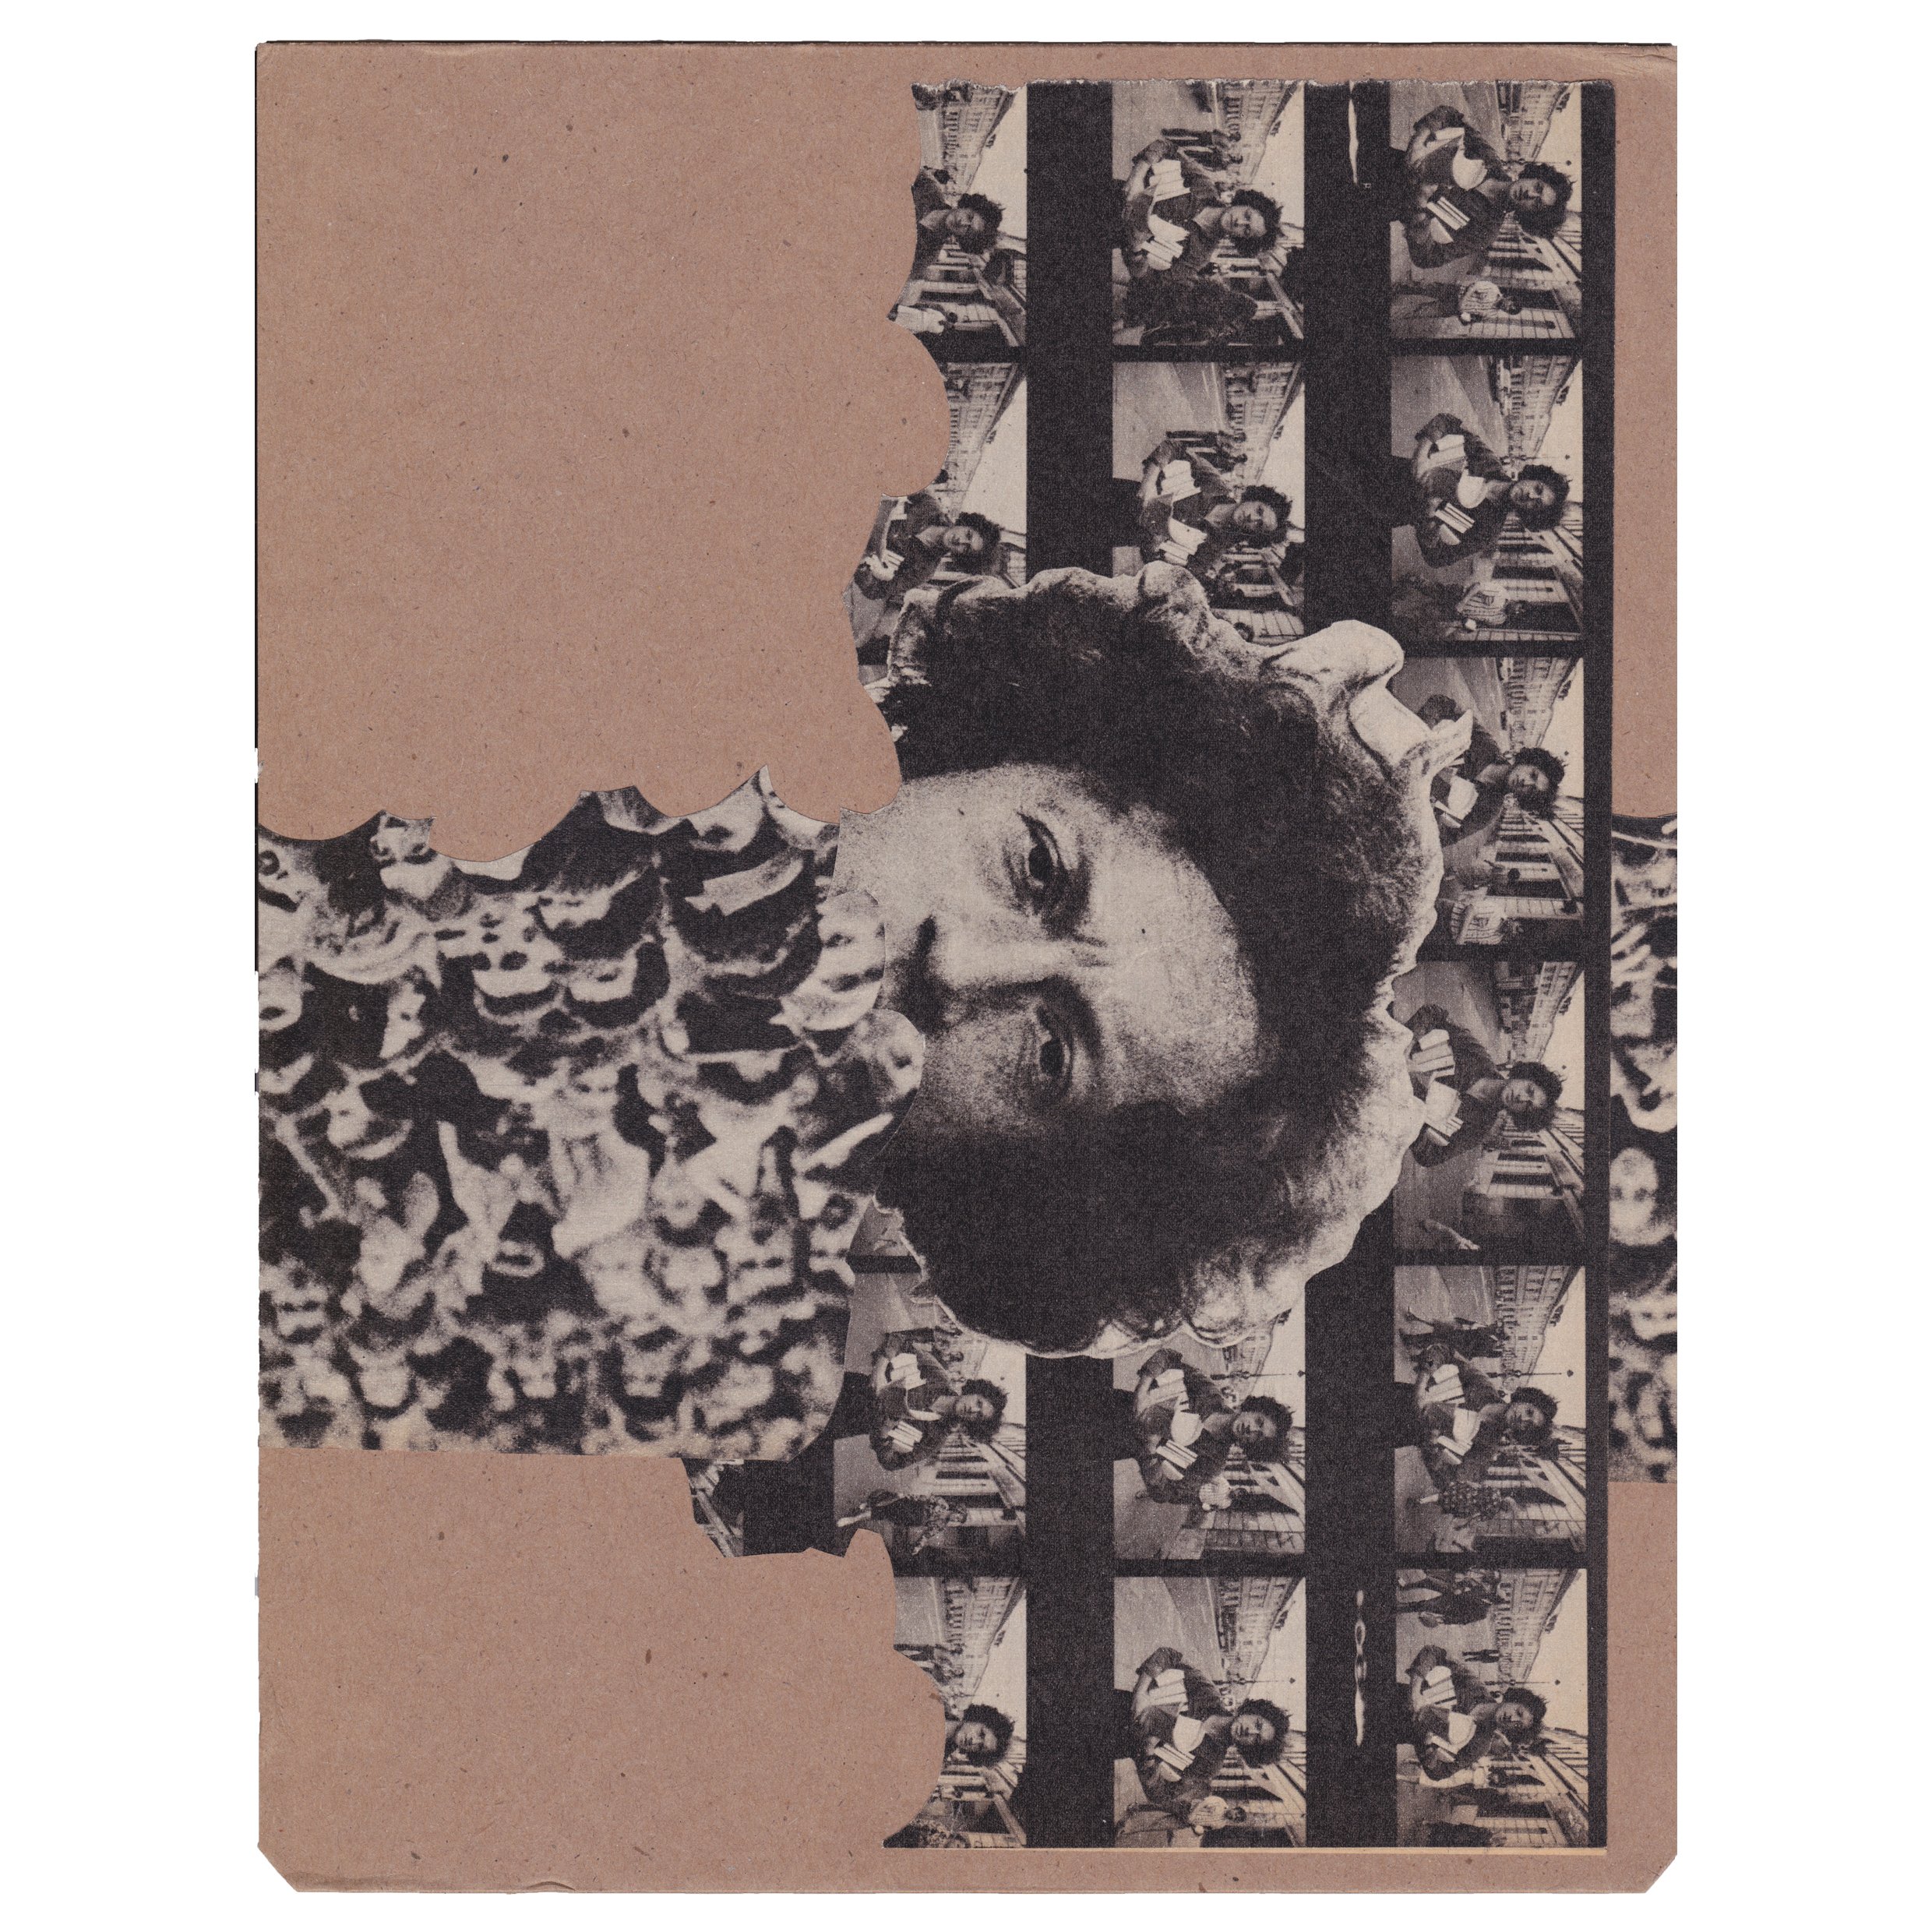  [Untitled] - vintage paper collage on cardboard, signed on the back   (2021)  (20,6x27,9cm) 